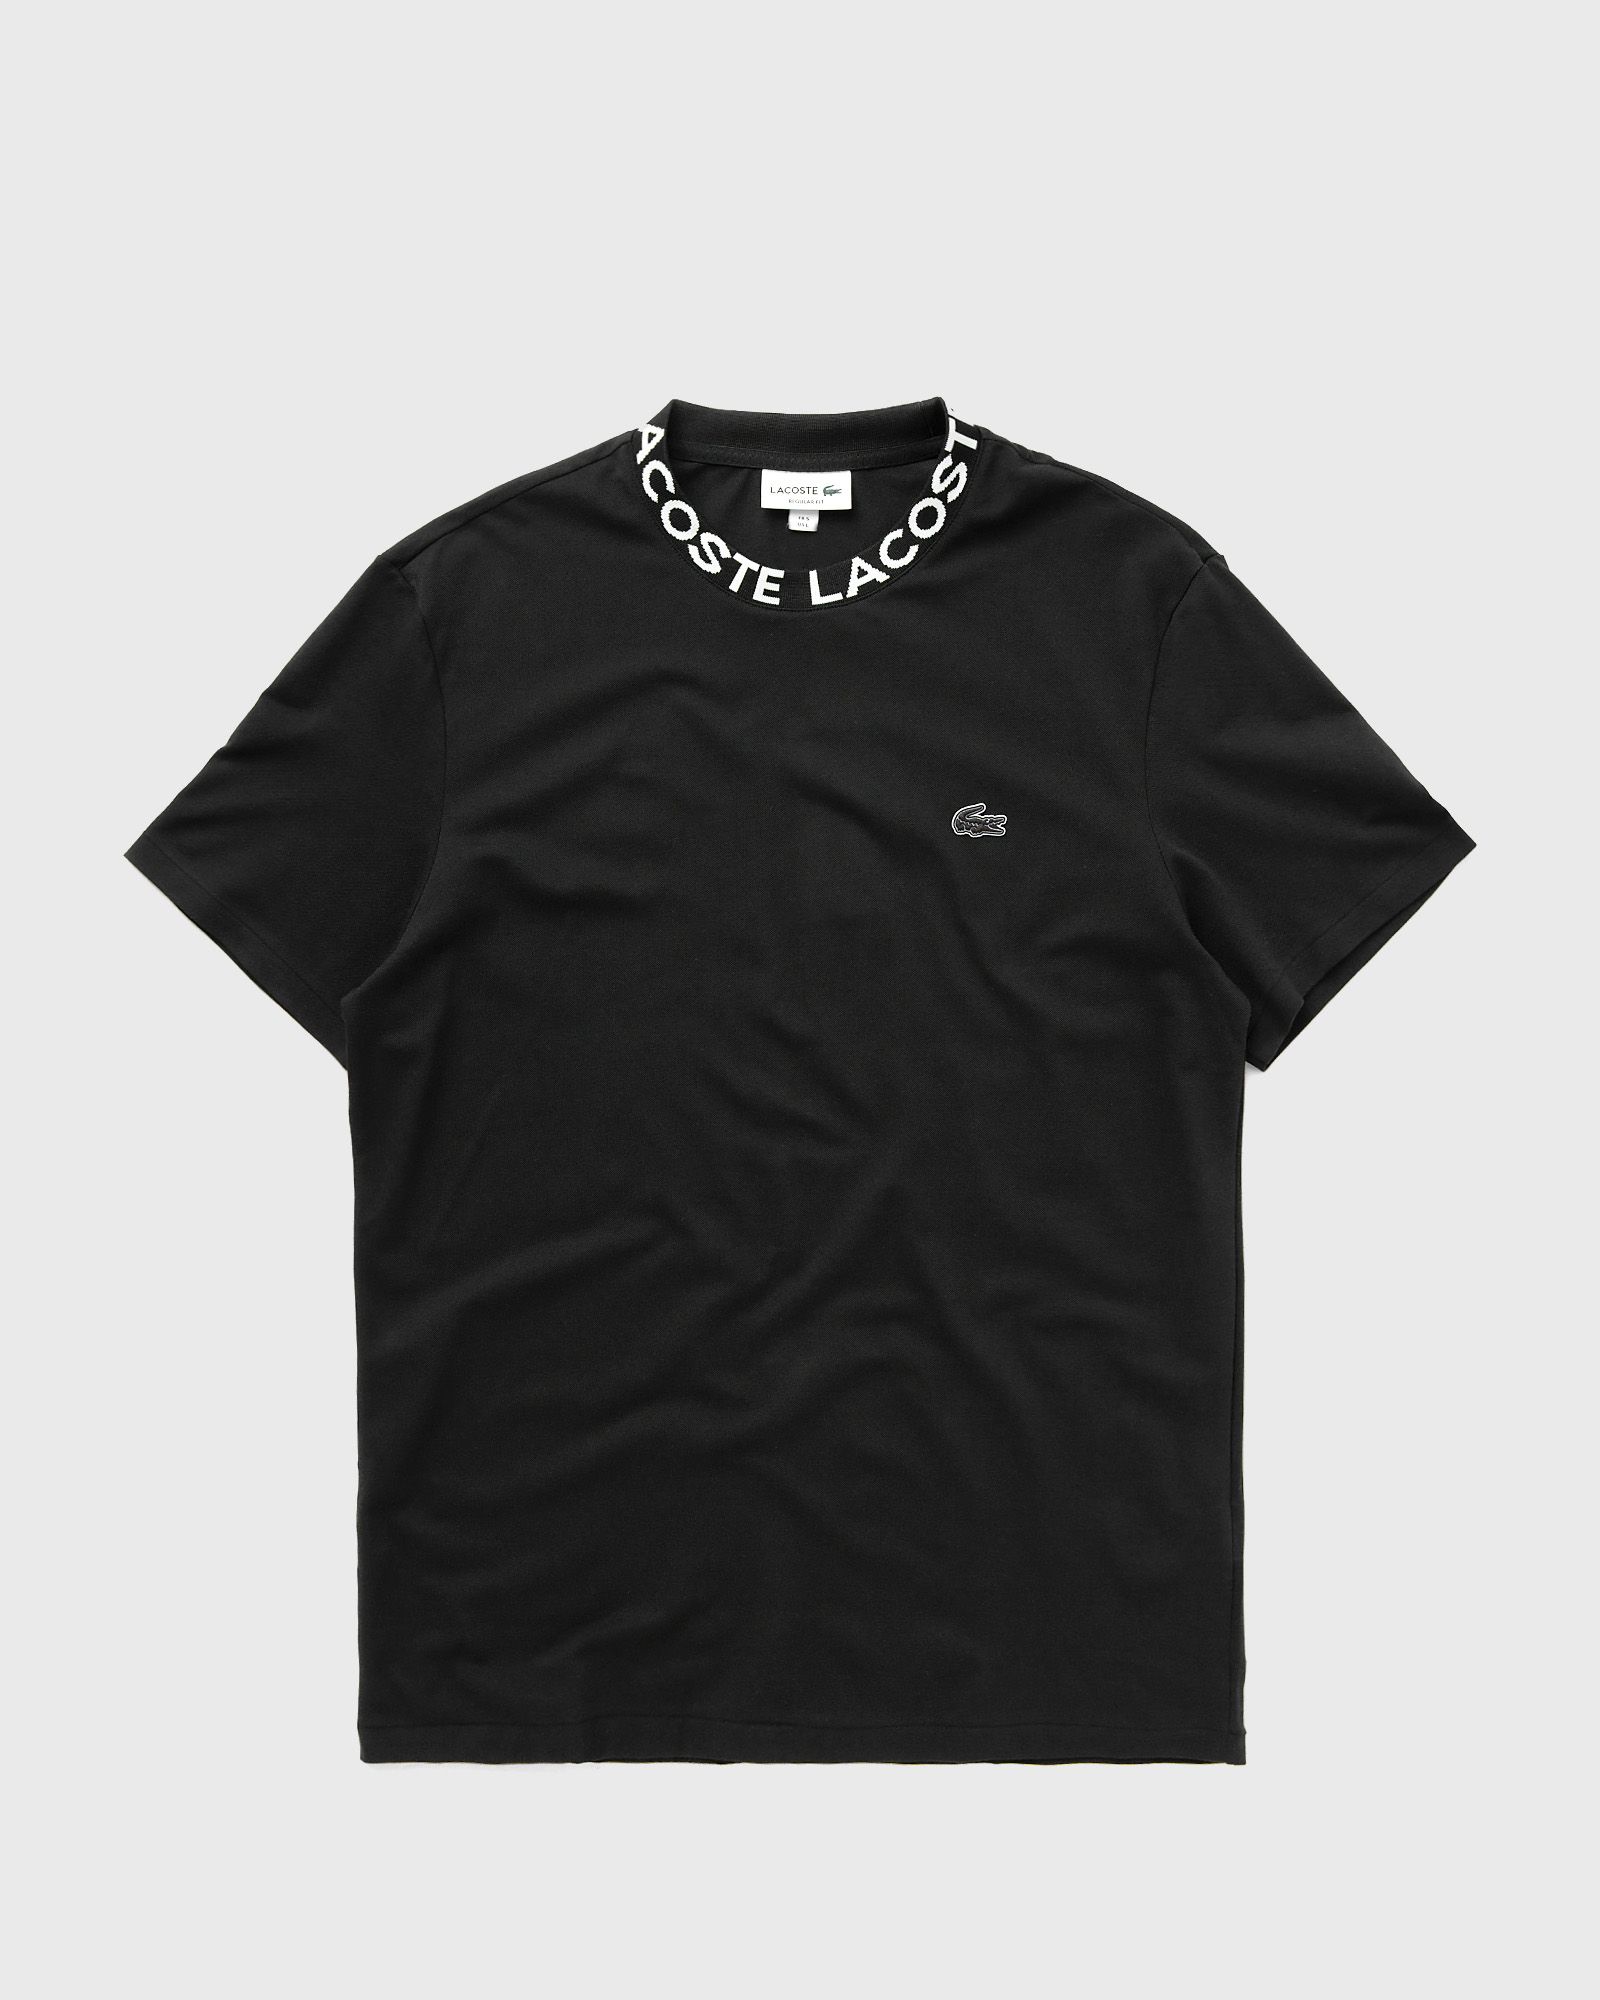 Lacoste - t-shirt men shortsleeves black in größe:xl